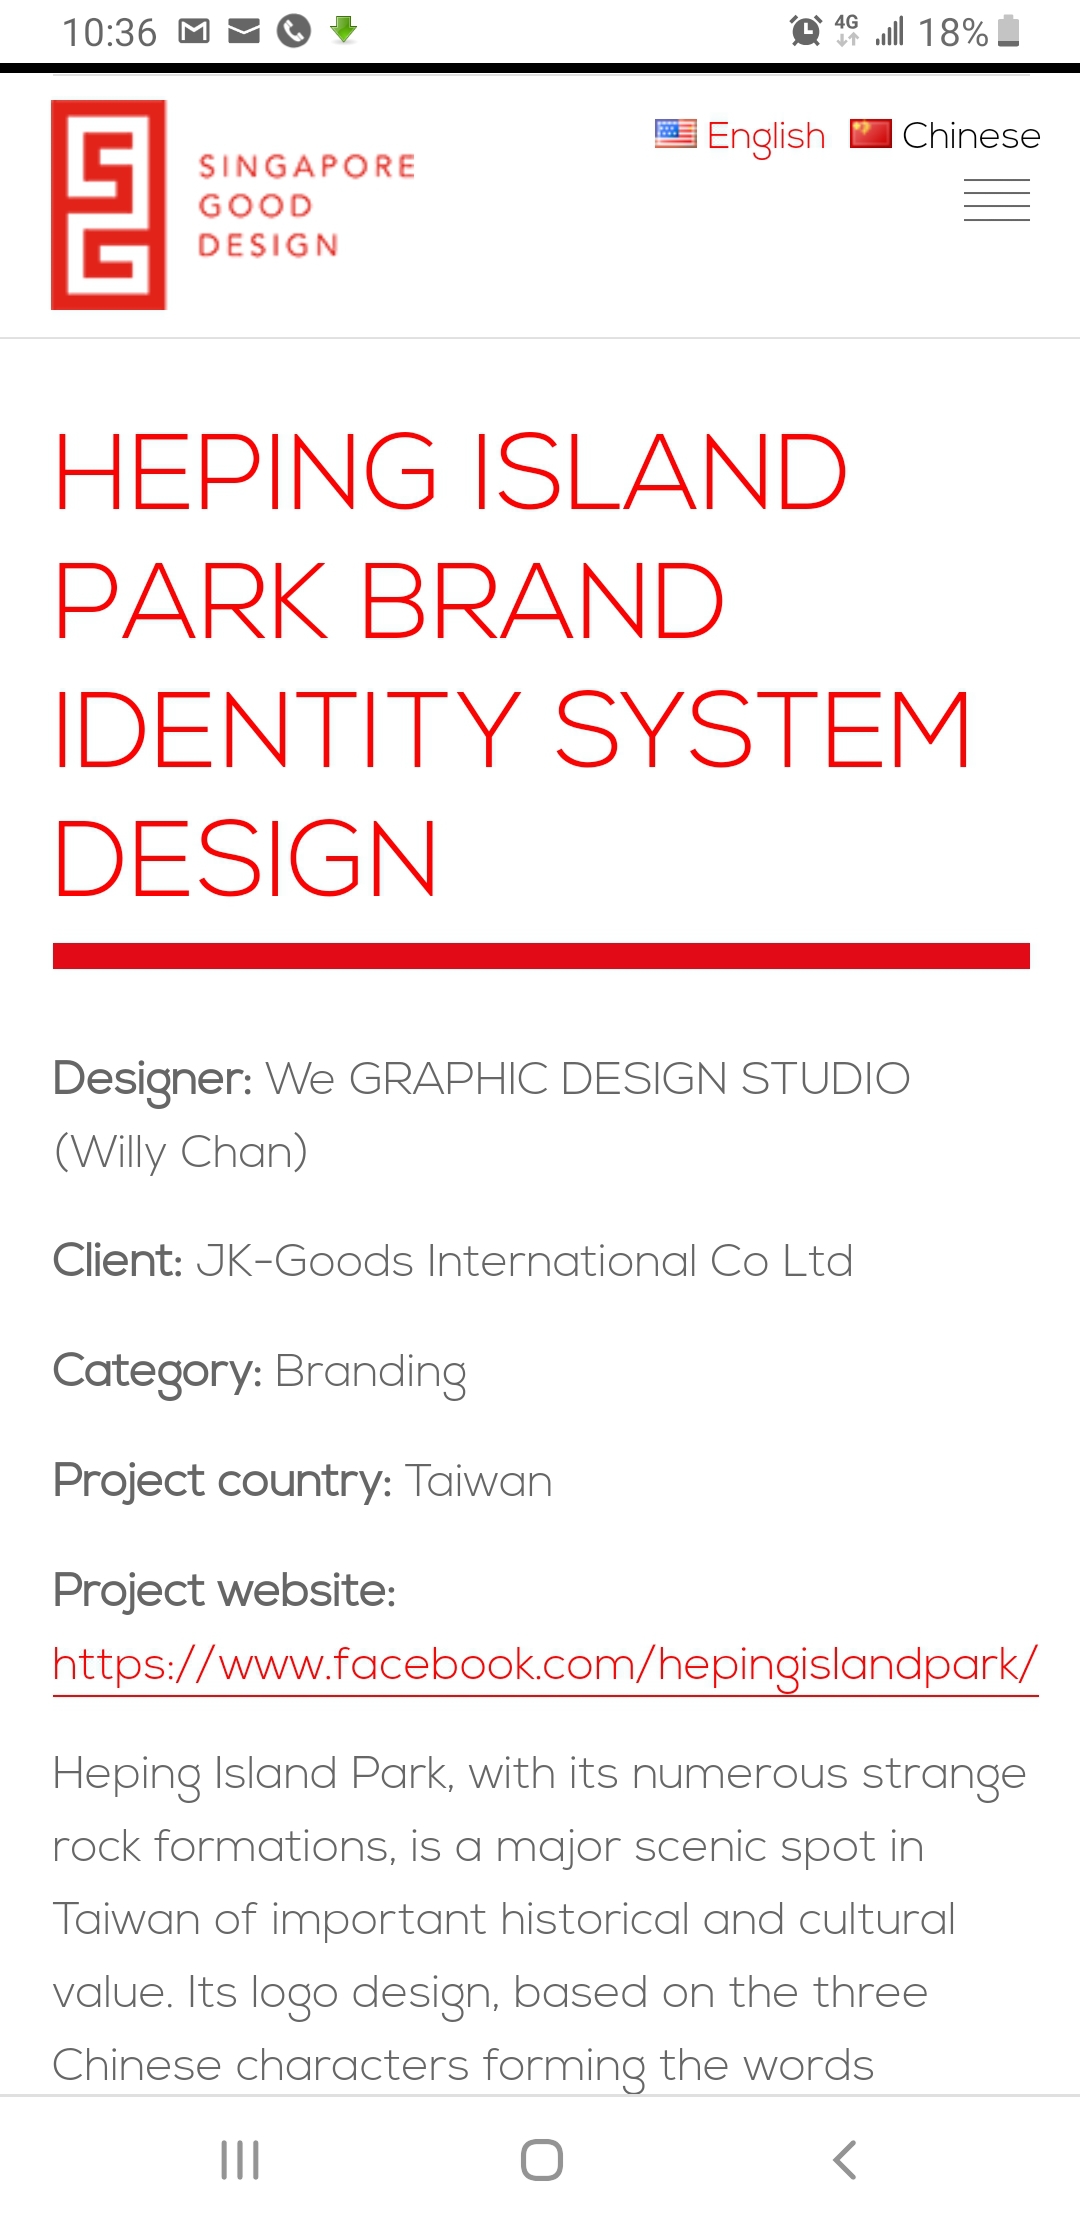 2020 Singapore Good Design Mark 頁面/和平島公園提供